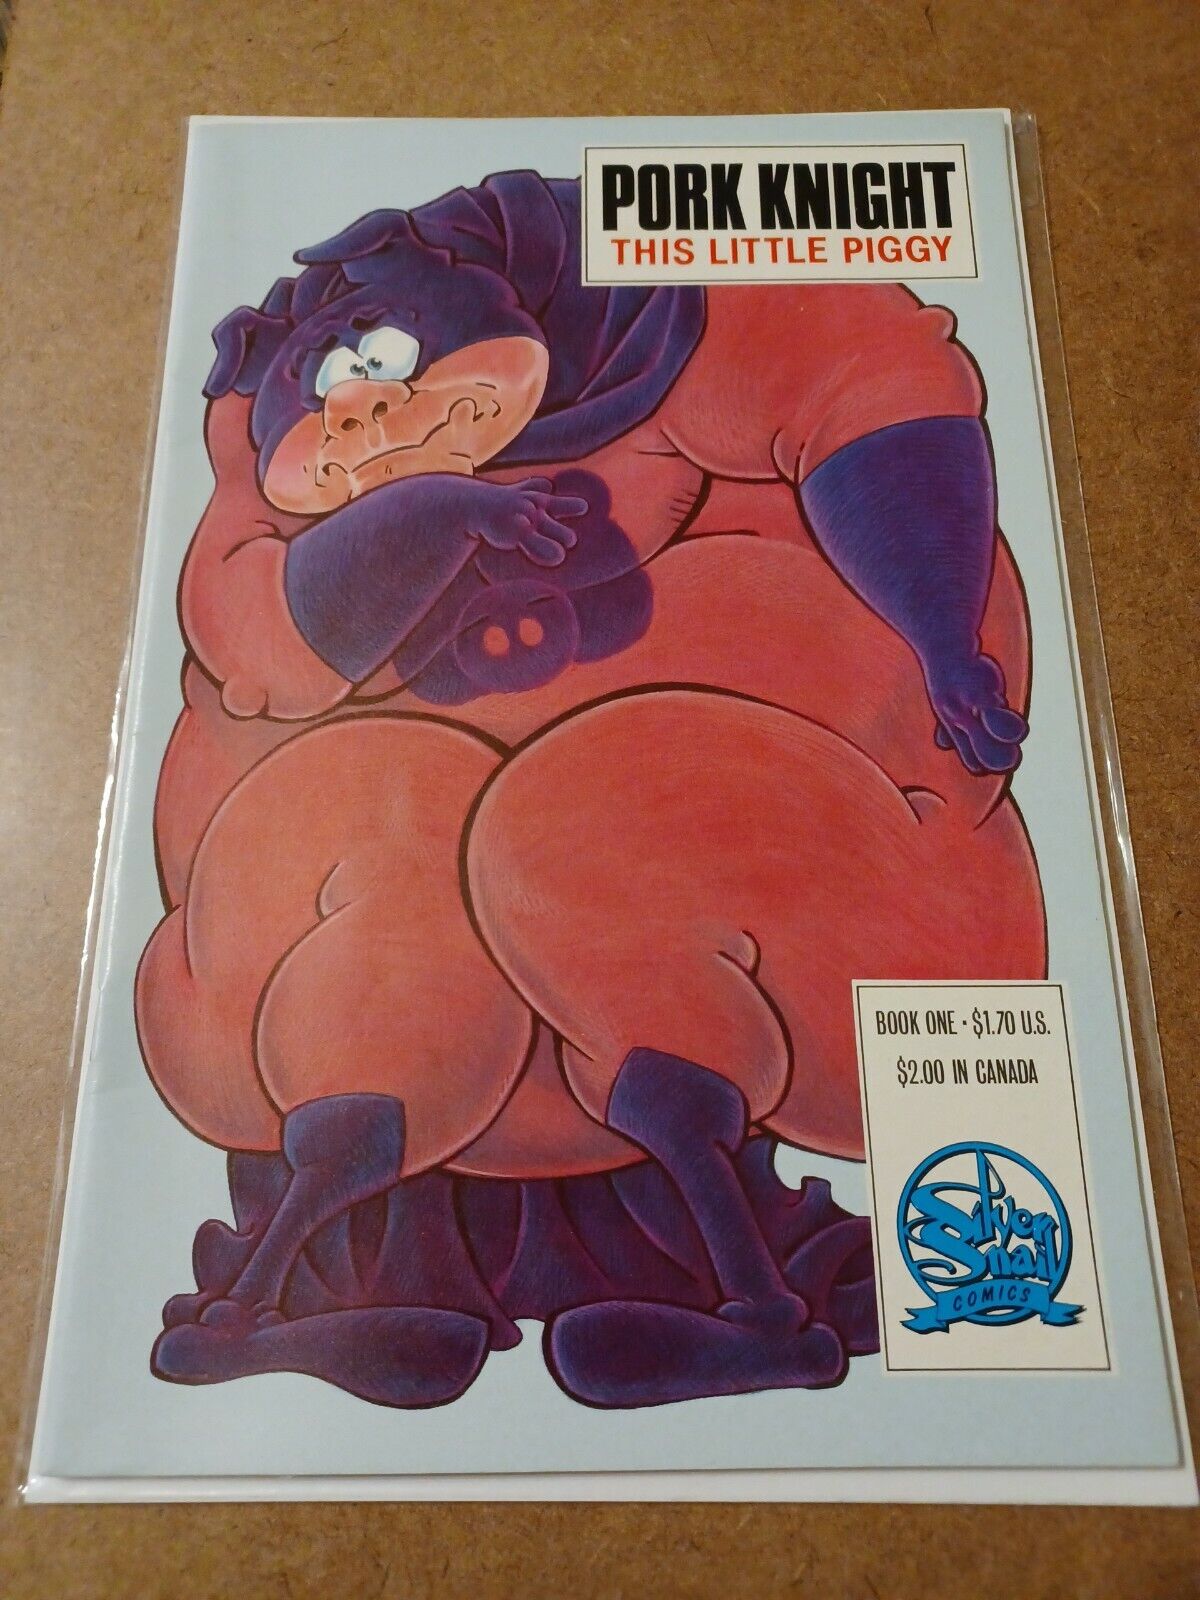 Pork Knight This Little Piggy #1 Comic Book - Dark Knight Returns Homage - DKR